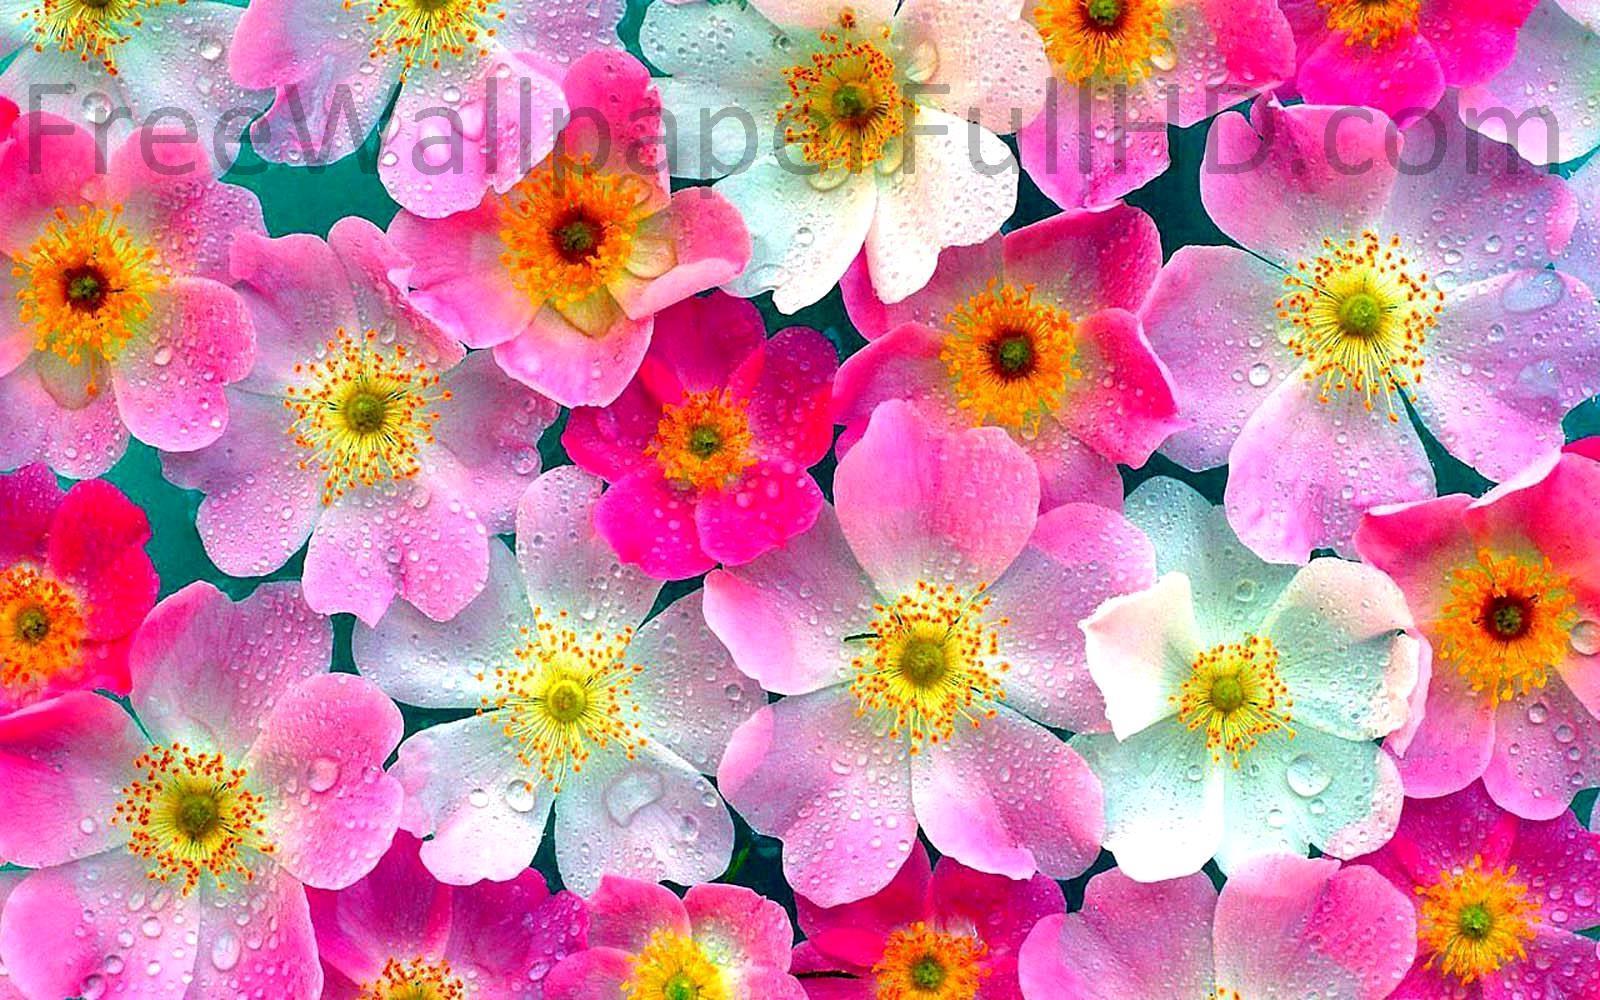 galerie wallpaper herunterladen,blume,blühende pflanze,blütenblatt,pflanze,rosa